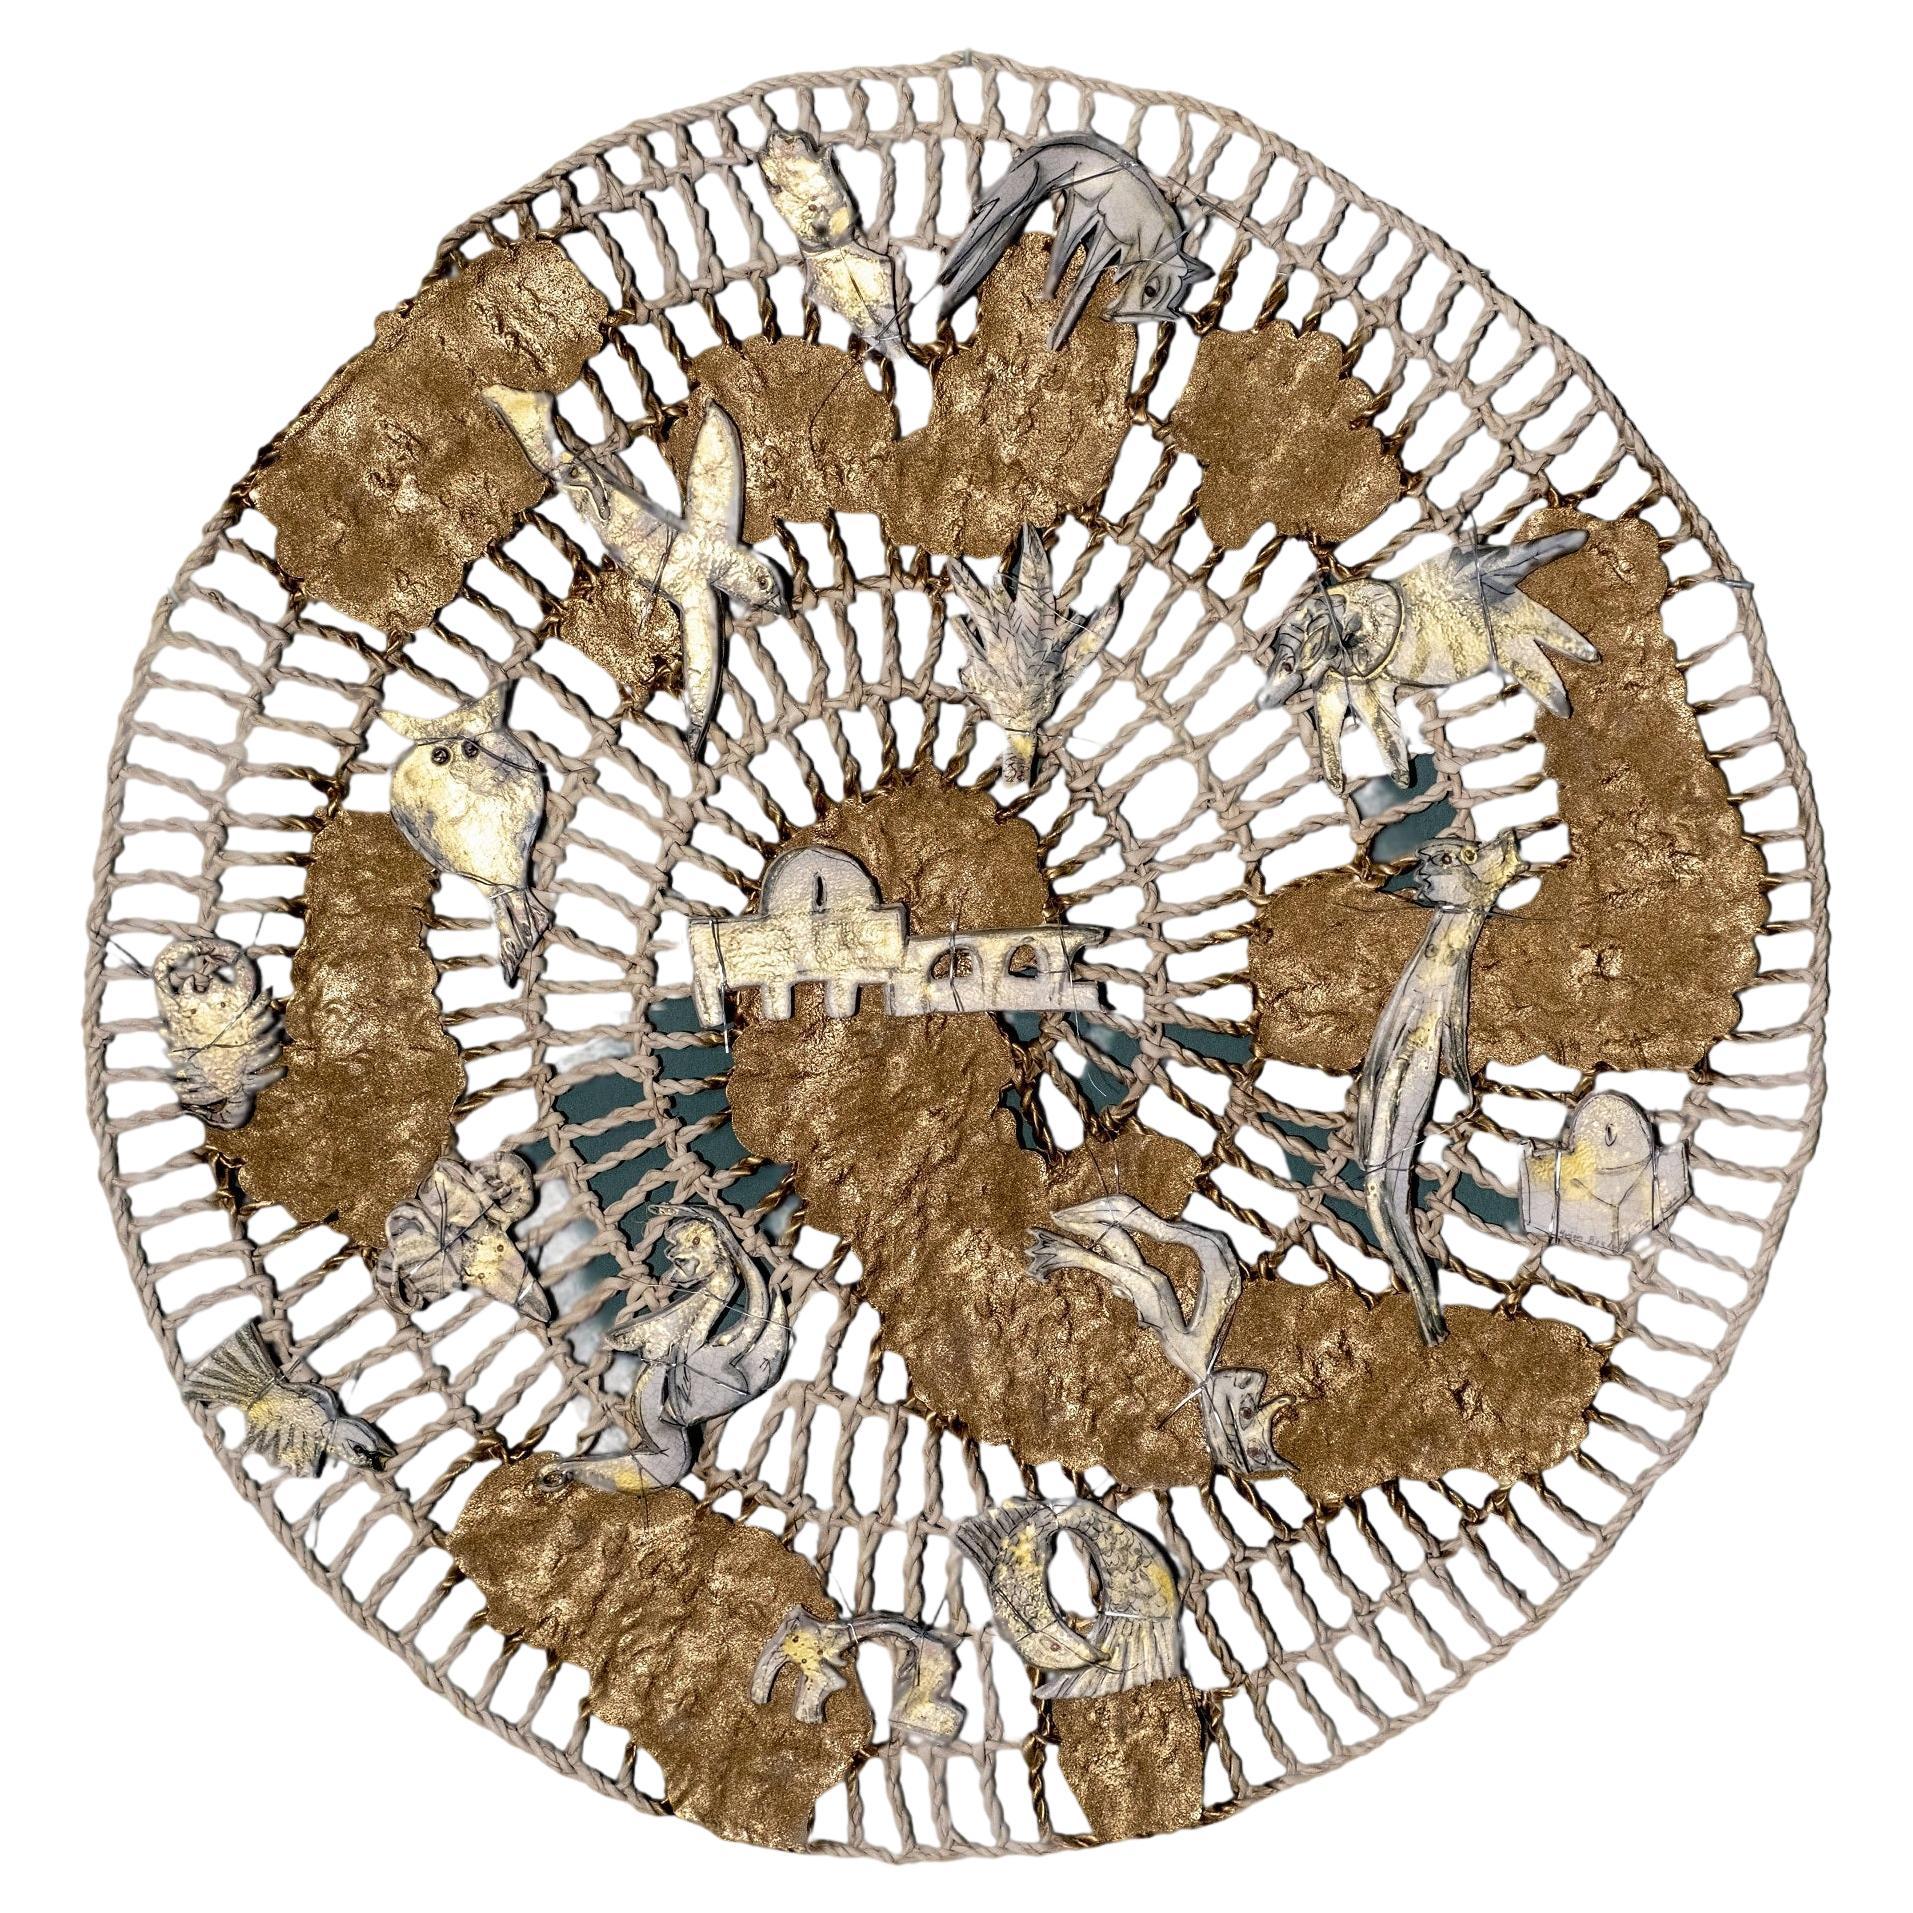 Wall Hanging Rug 6'7" : Ecological handmade weaving in natural fiber by meriem